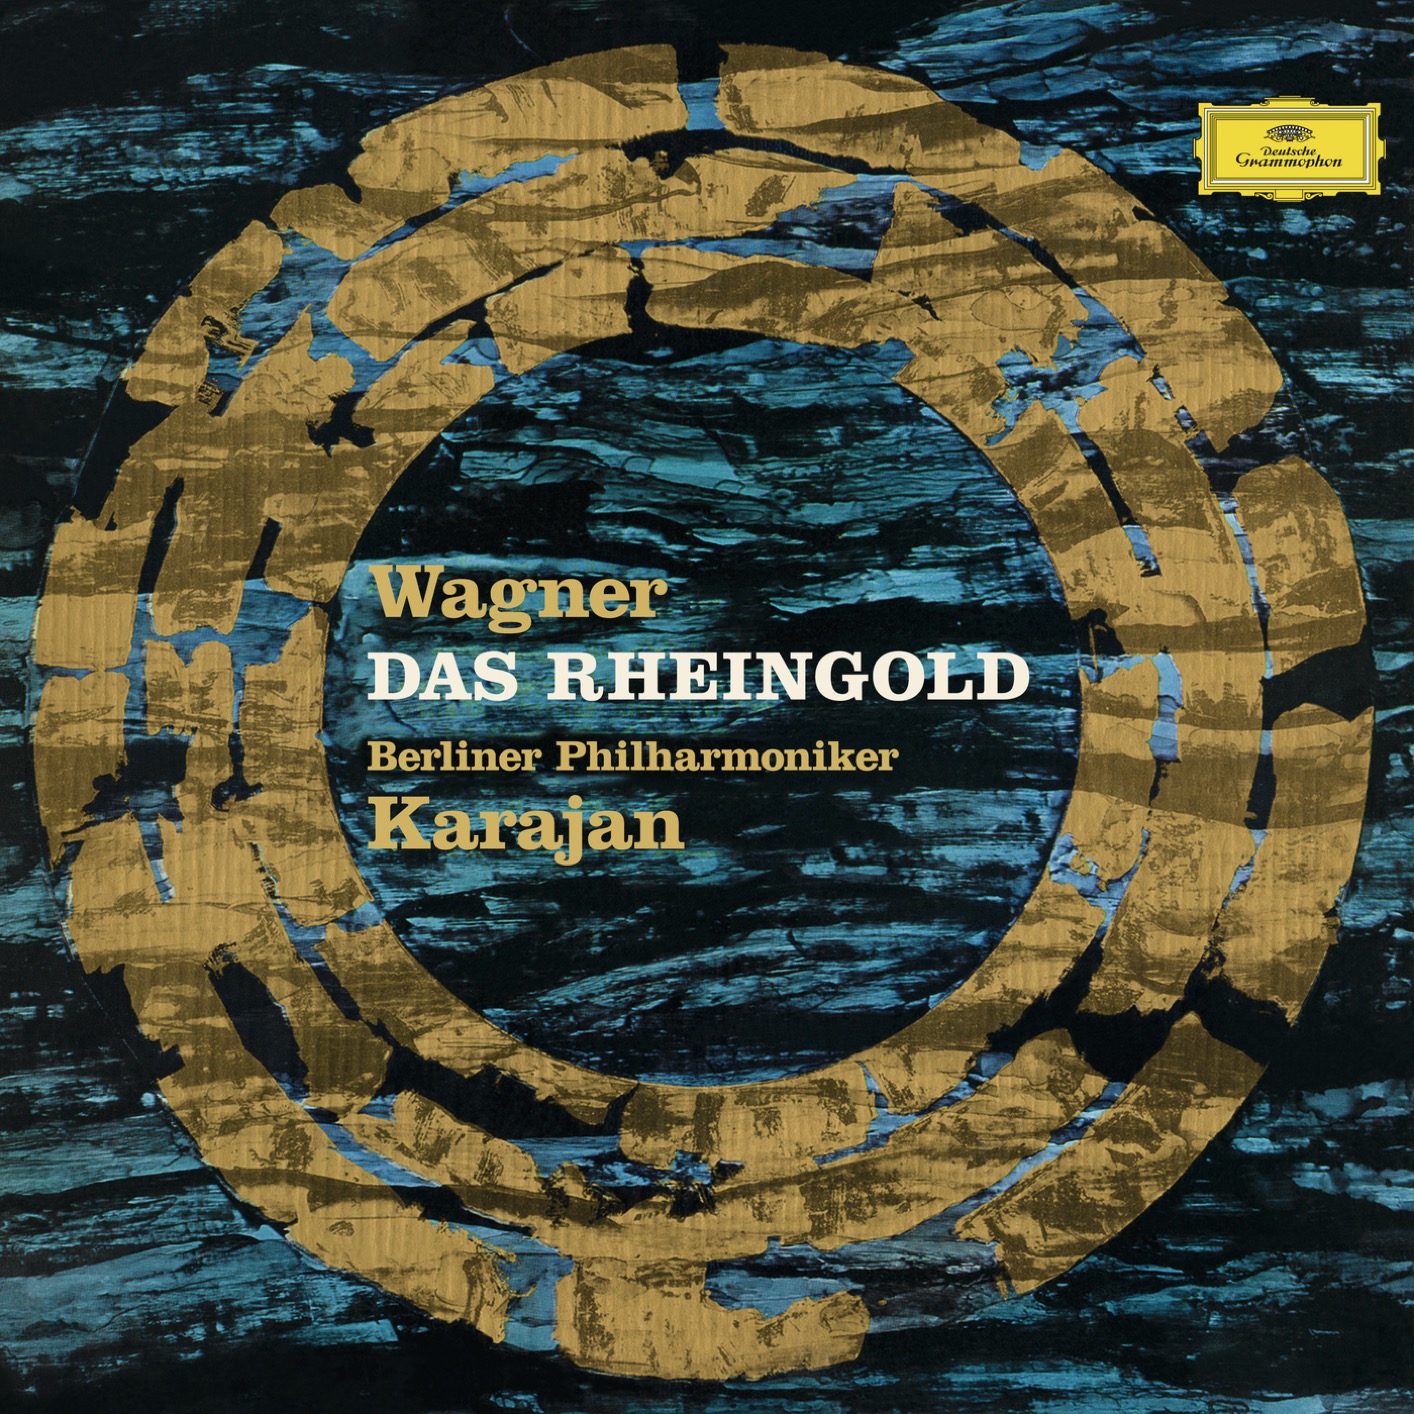 Wagner: Der Ring des Nibelungen 2 - Das Rheingold (Remaster)". Album of Berliner Philharmoniker & Herbert von Karajan buy or stream. HIGHRESAUDIO